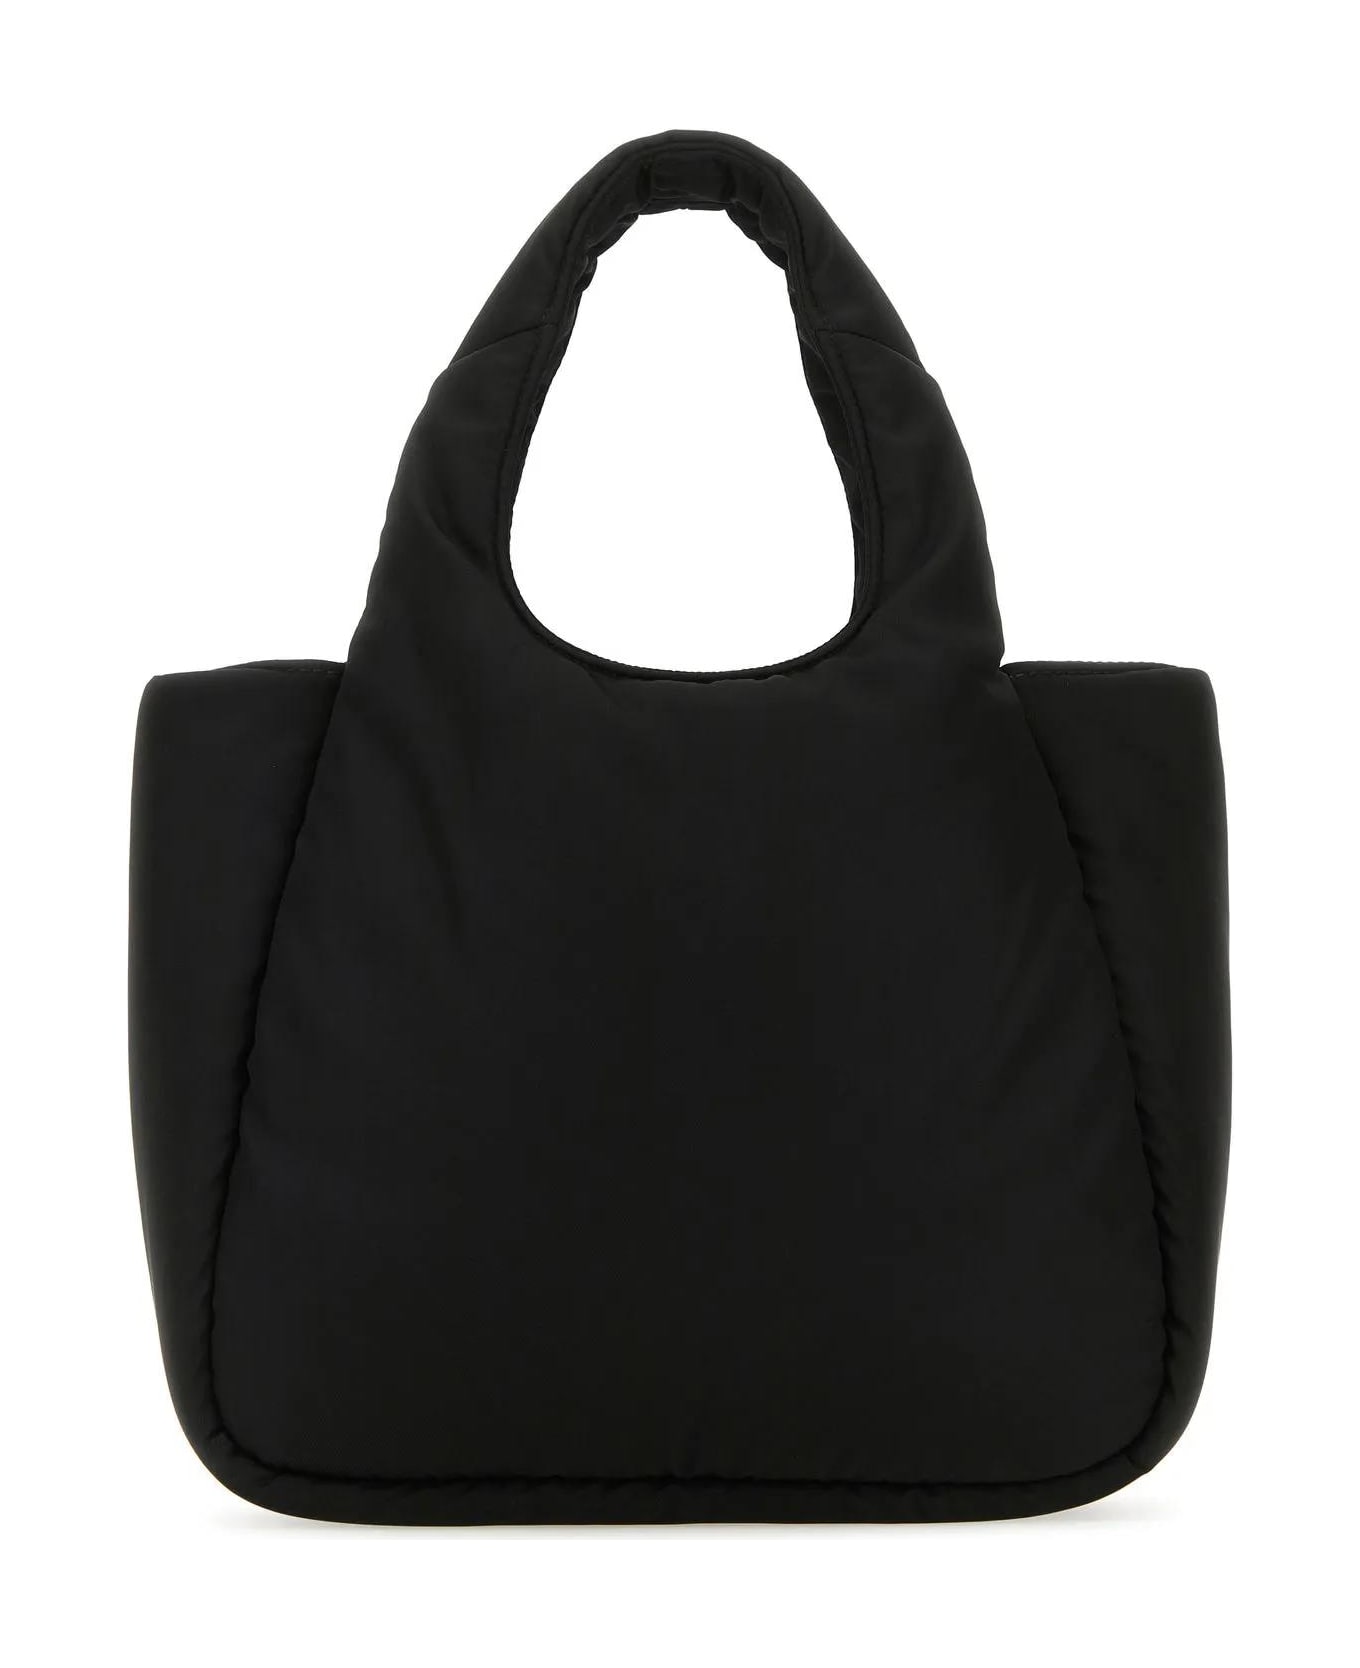 Prada Black Nylon Leather Handbag